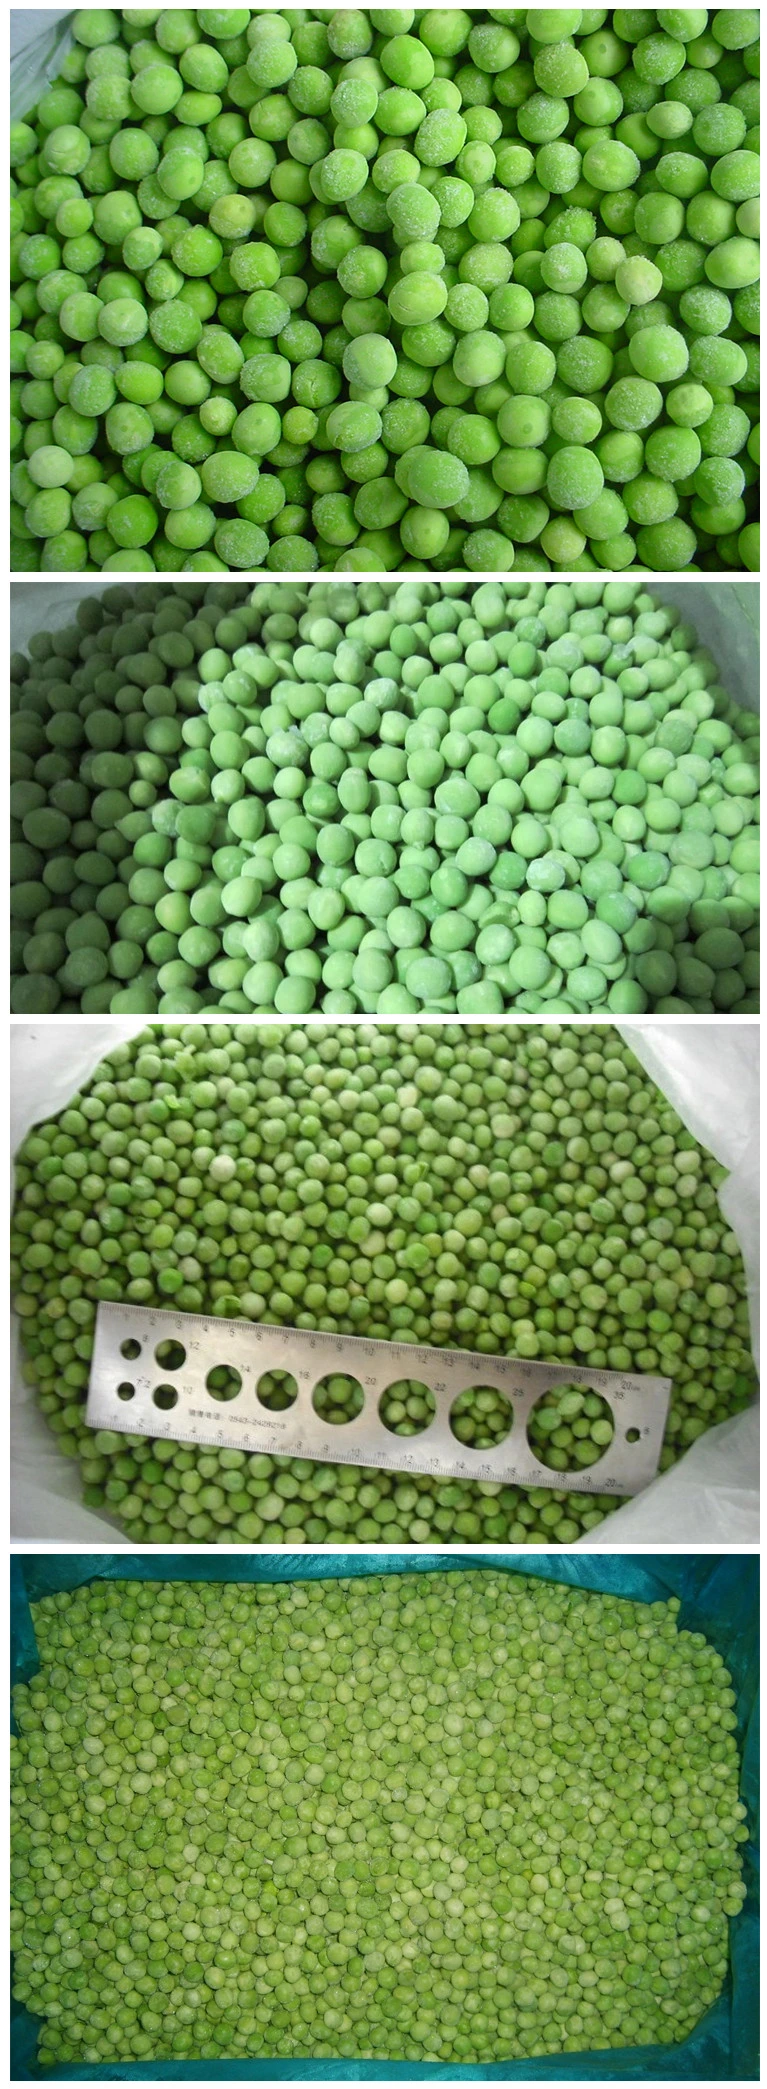 Frozen Green Peas Frozen Green Chinese New Crop Frozen Whole Green Peas 2020 Wholesale Price